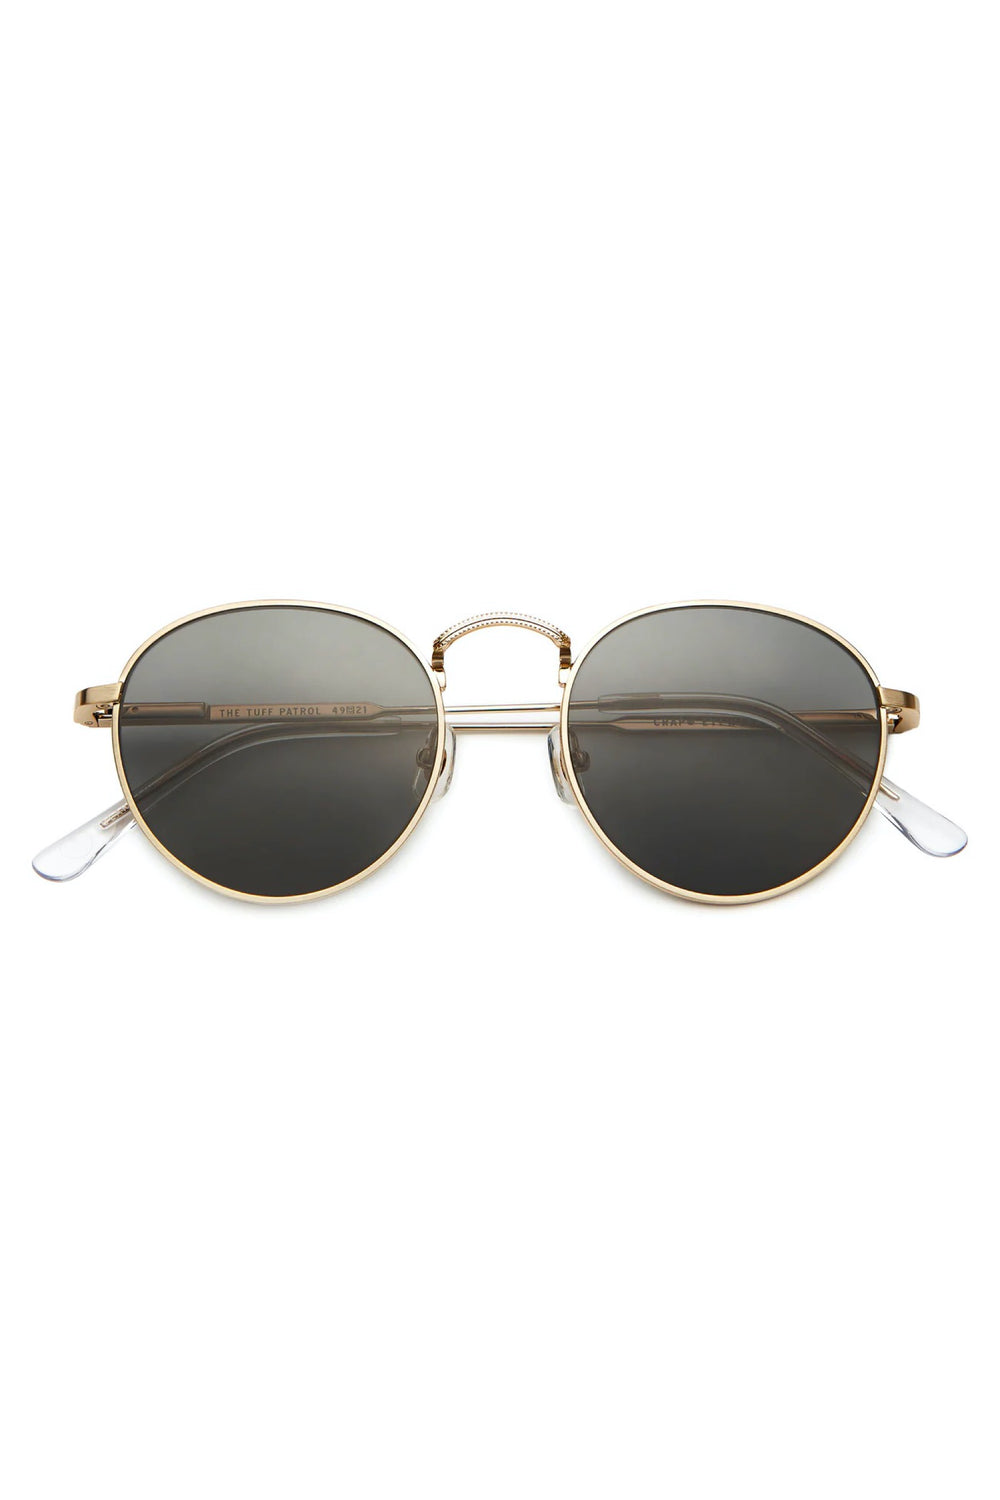 MATTISE Gold Unisex Polarized Sunglasses Made of Stainless Steel